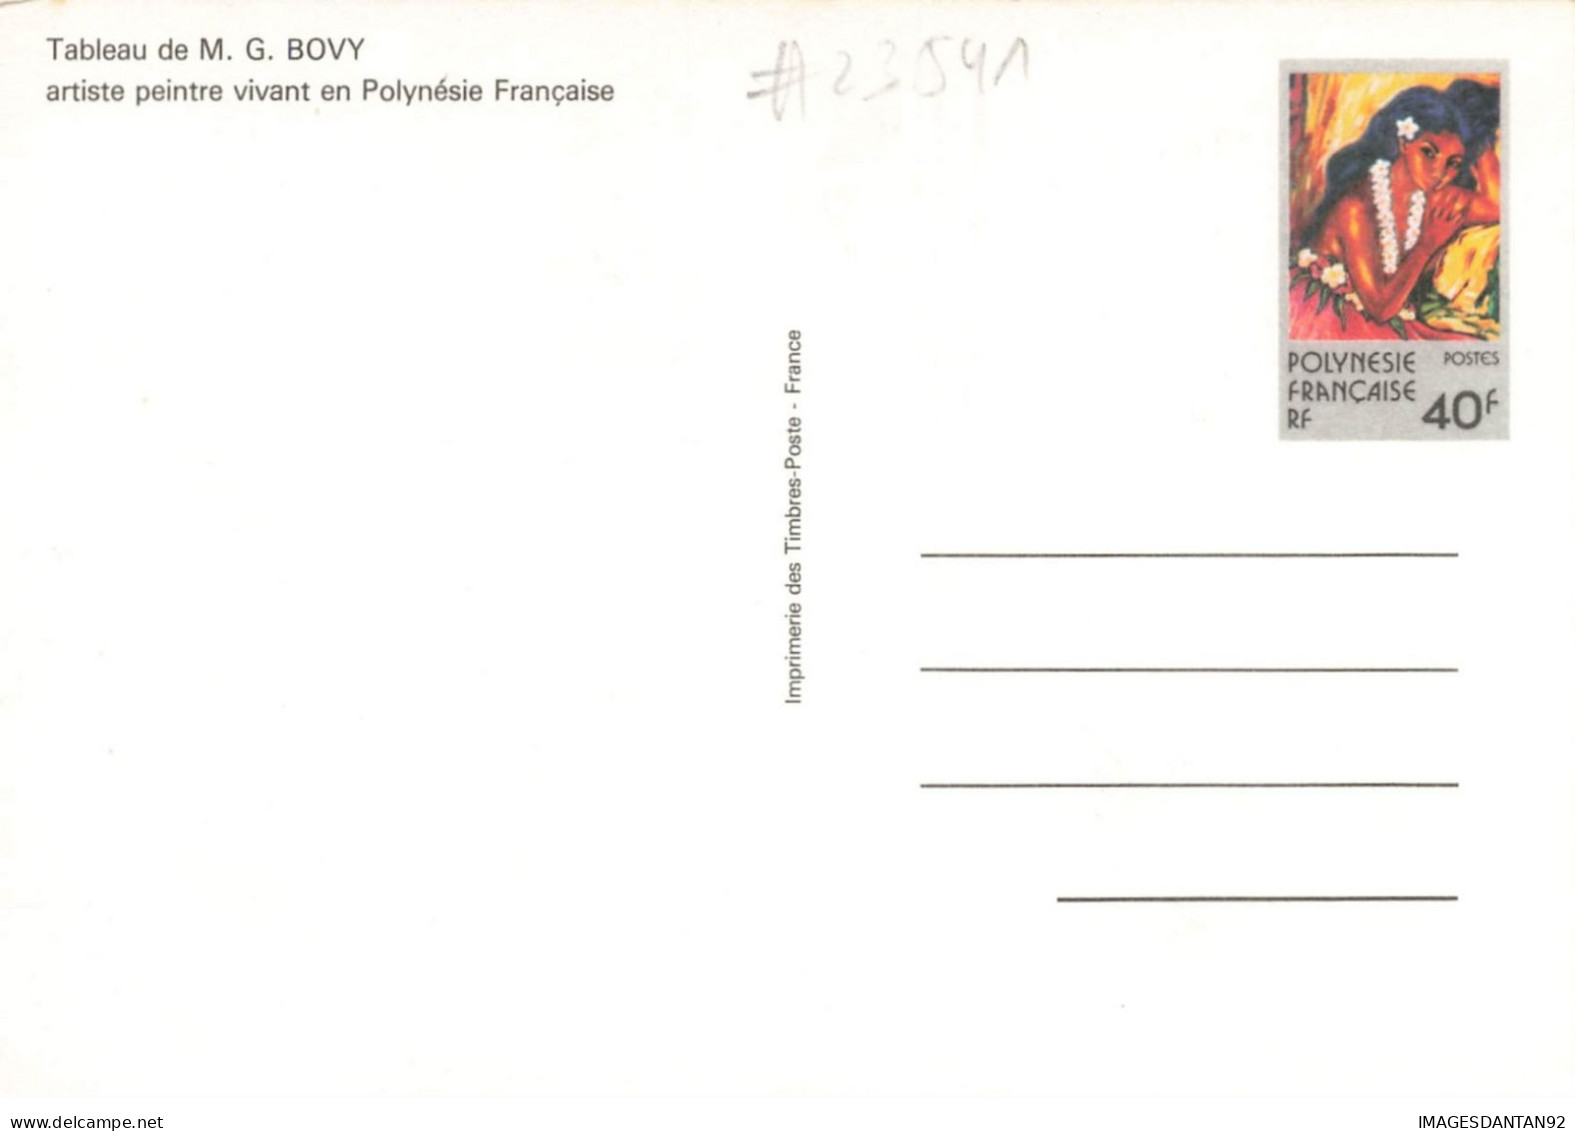 ENTIER POSTAL #23541 POLYNESIE FRANCAISE TABLEAU DE BOVY ARTISTE PEINTRE - Enteros Postales